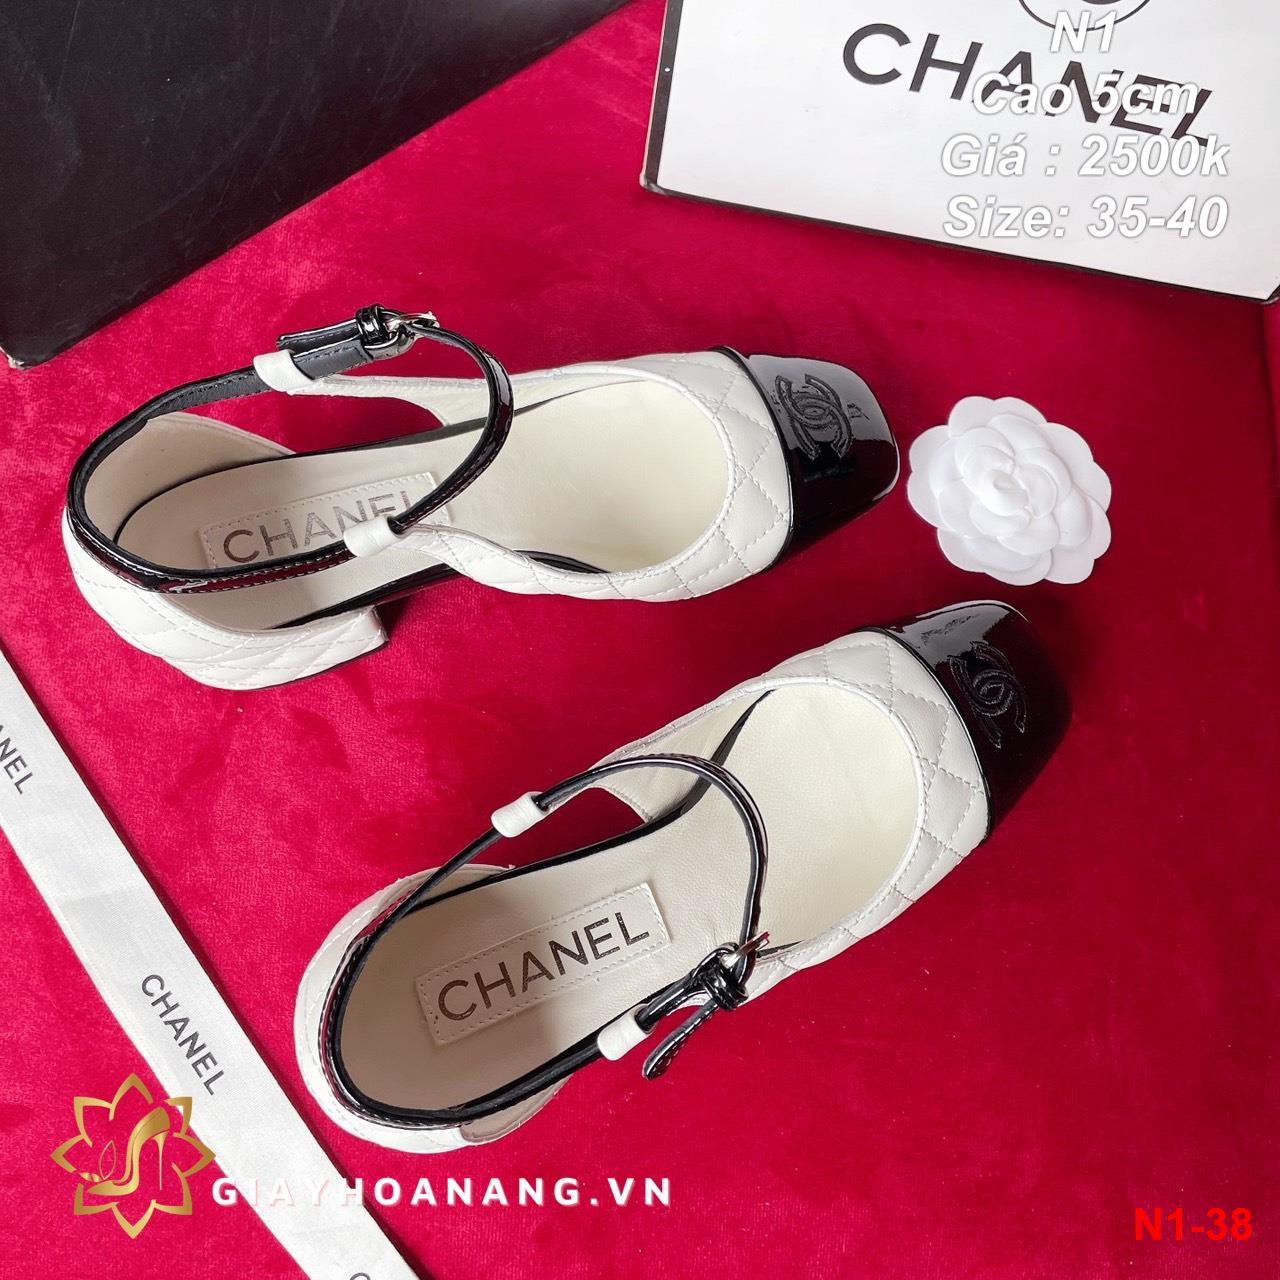 N1-38 Chanel sandal cao 5cm siêu cấp